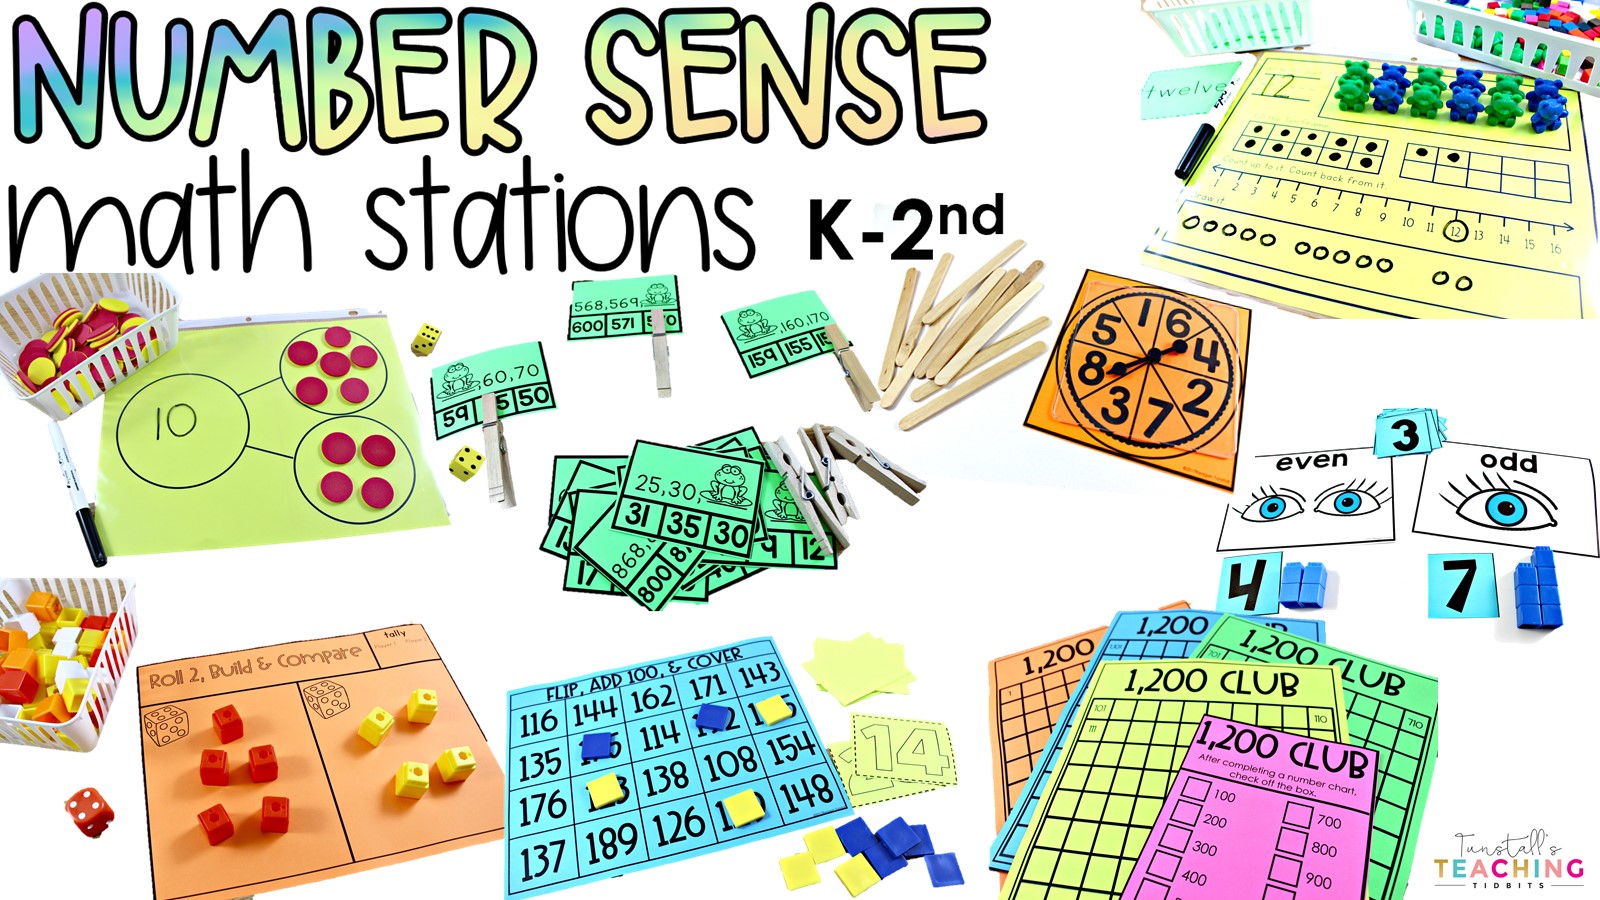 Number Sense Workstations K-2 and 3rd